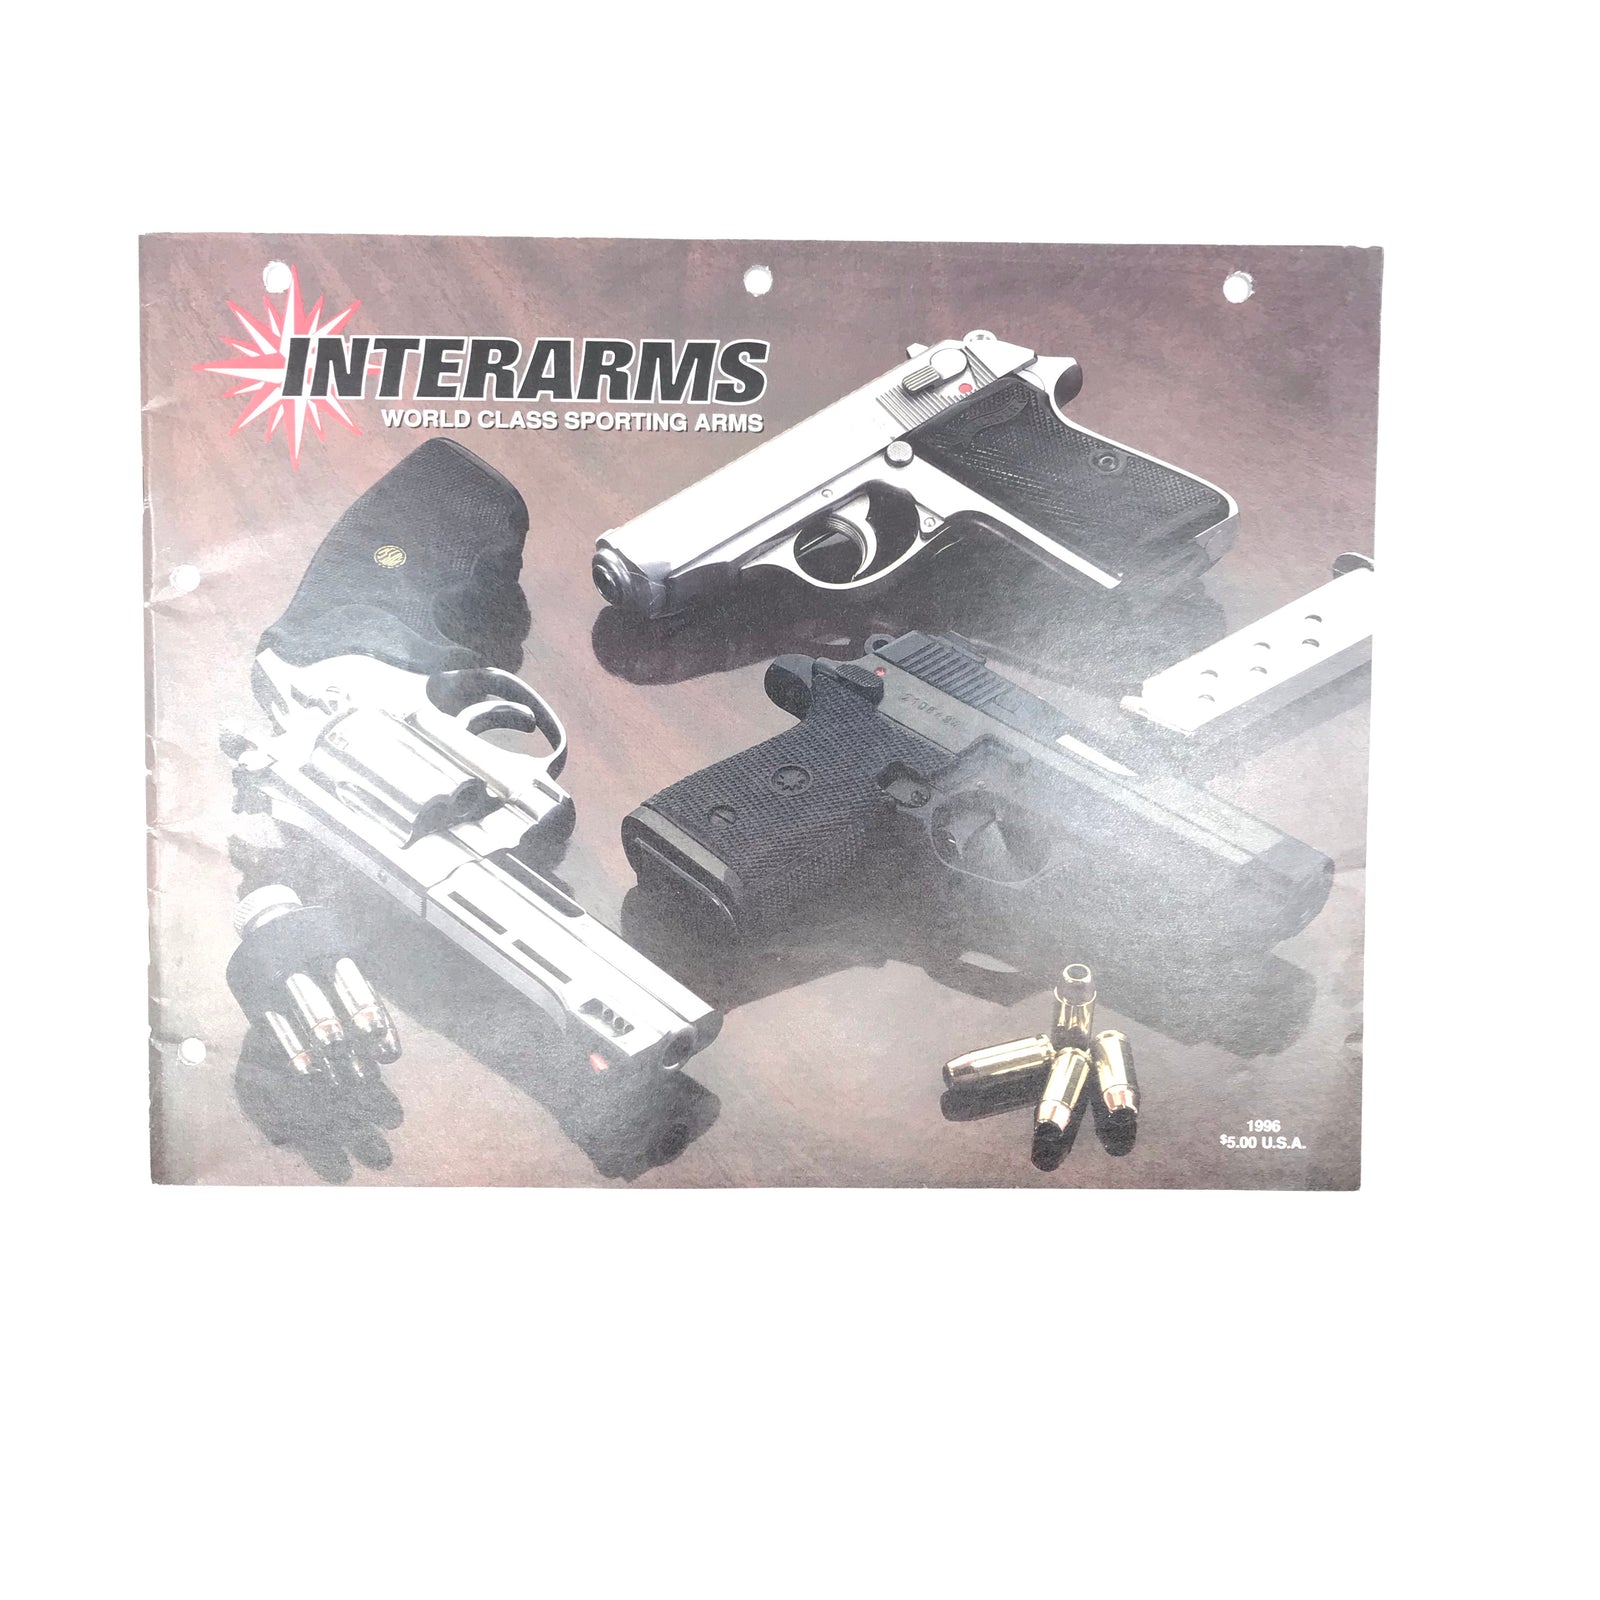 Interarms World Class Sporting Arms 1996 Catalogue